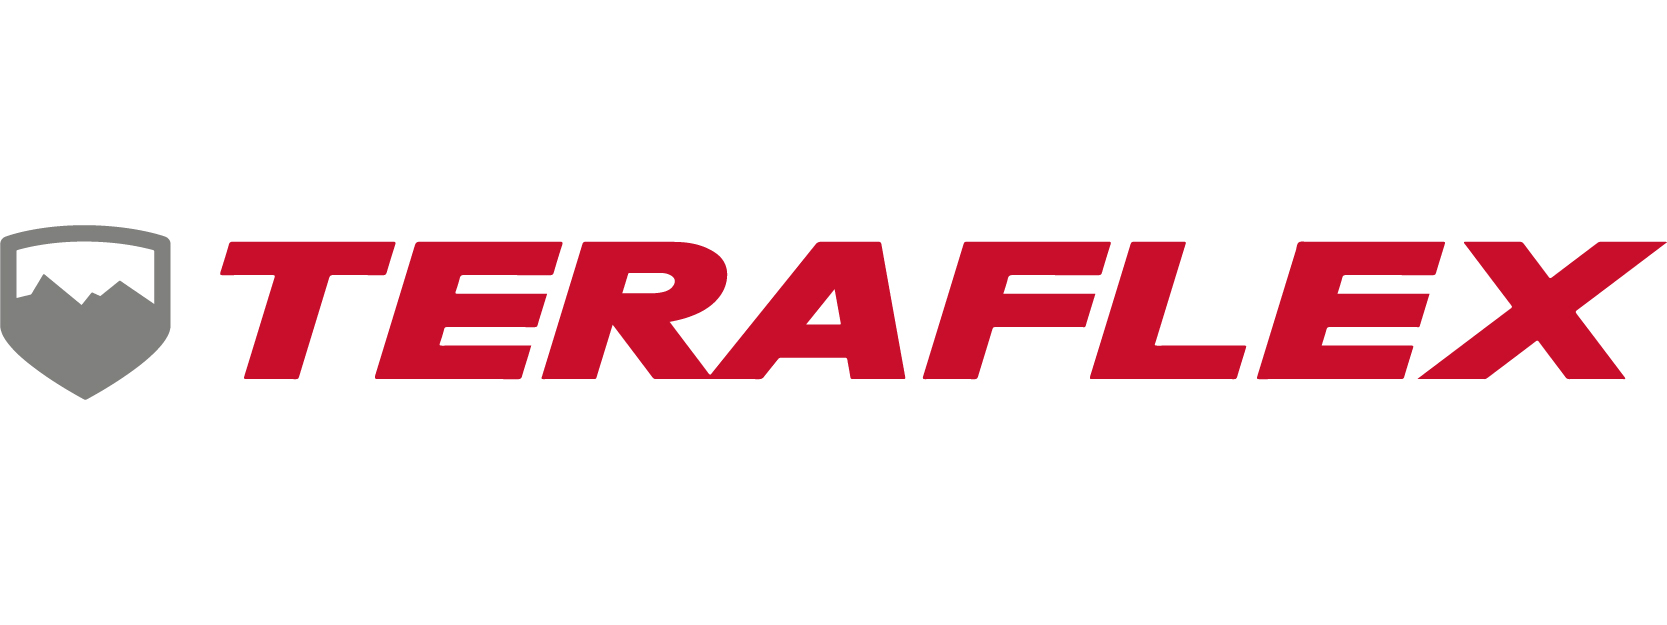 Teraflex-logo.jpg